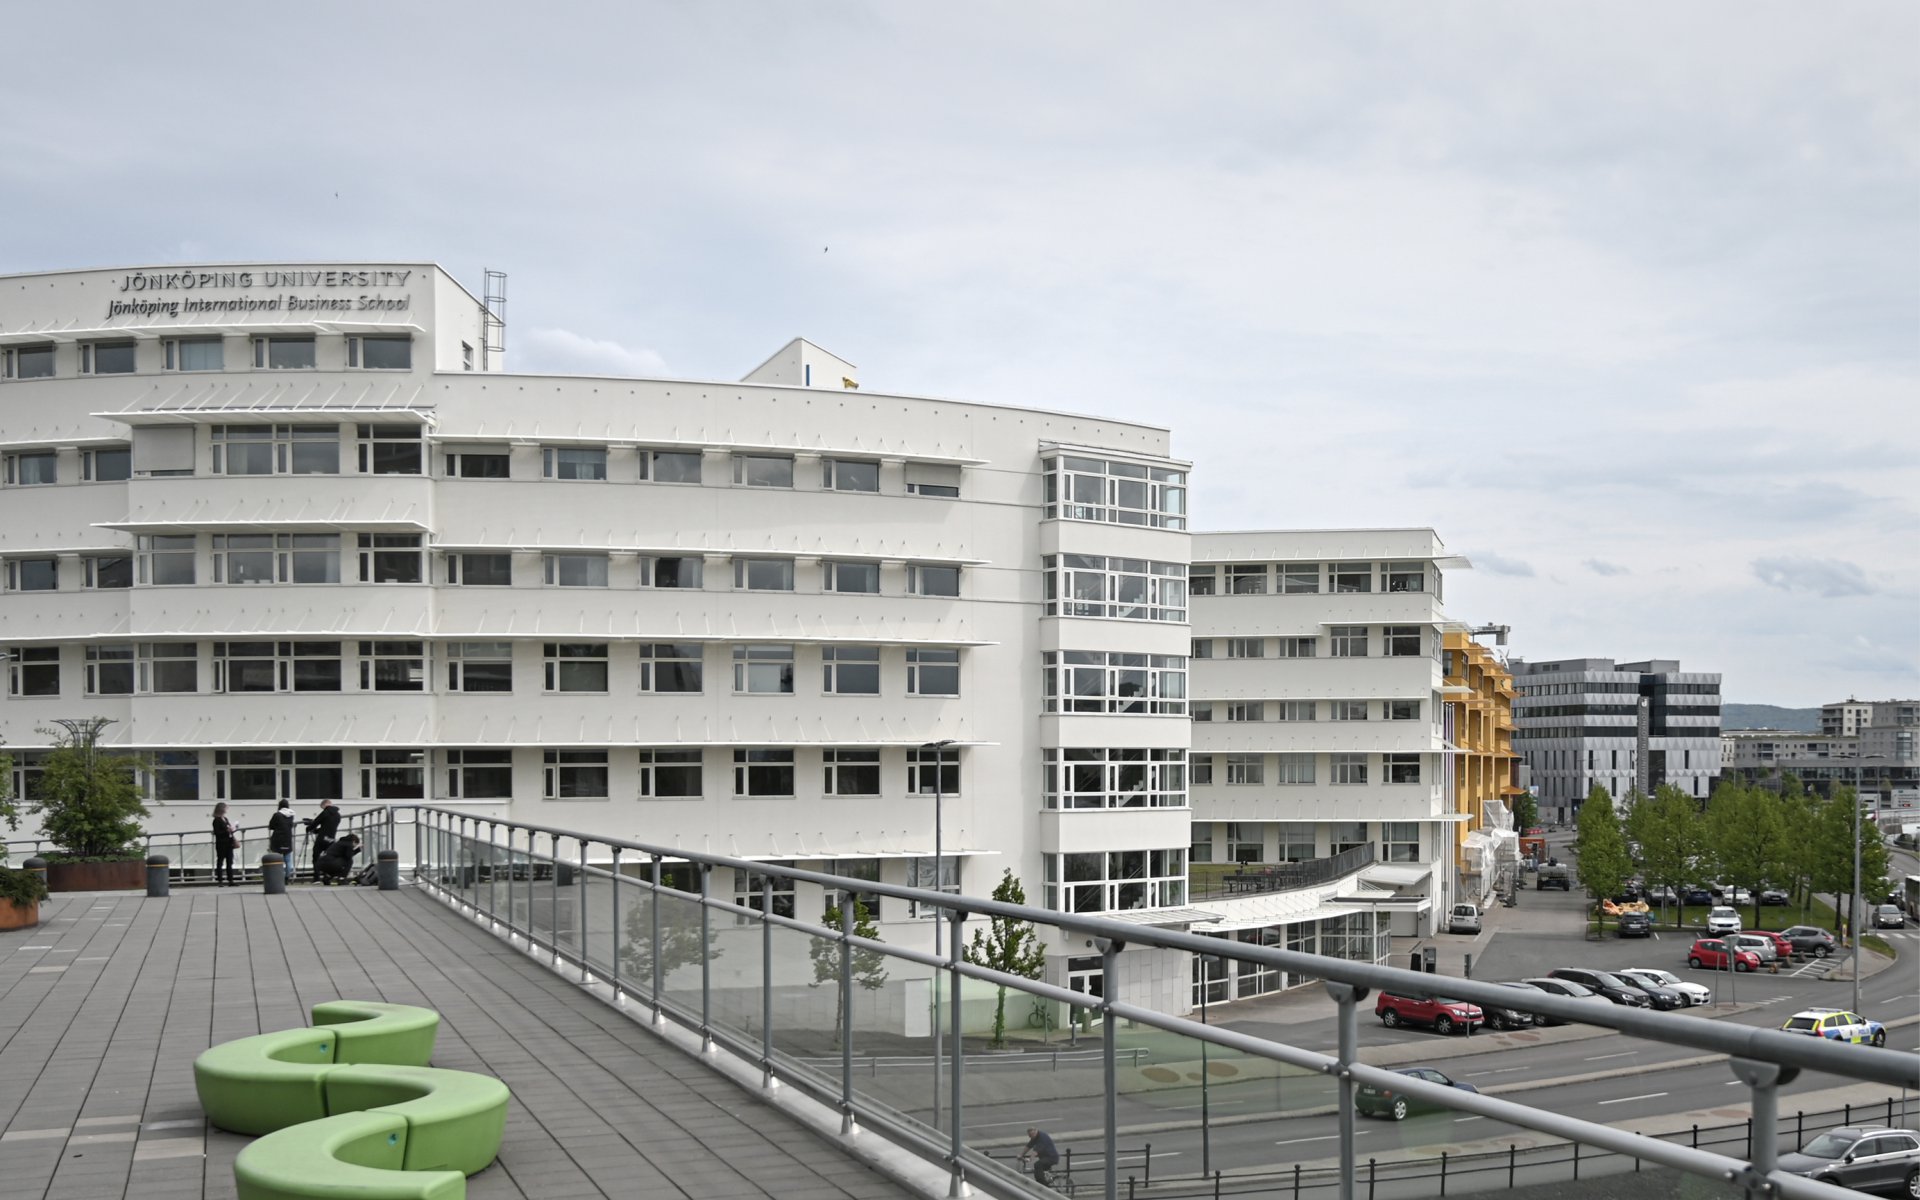 Jönköping Universitet